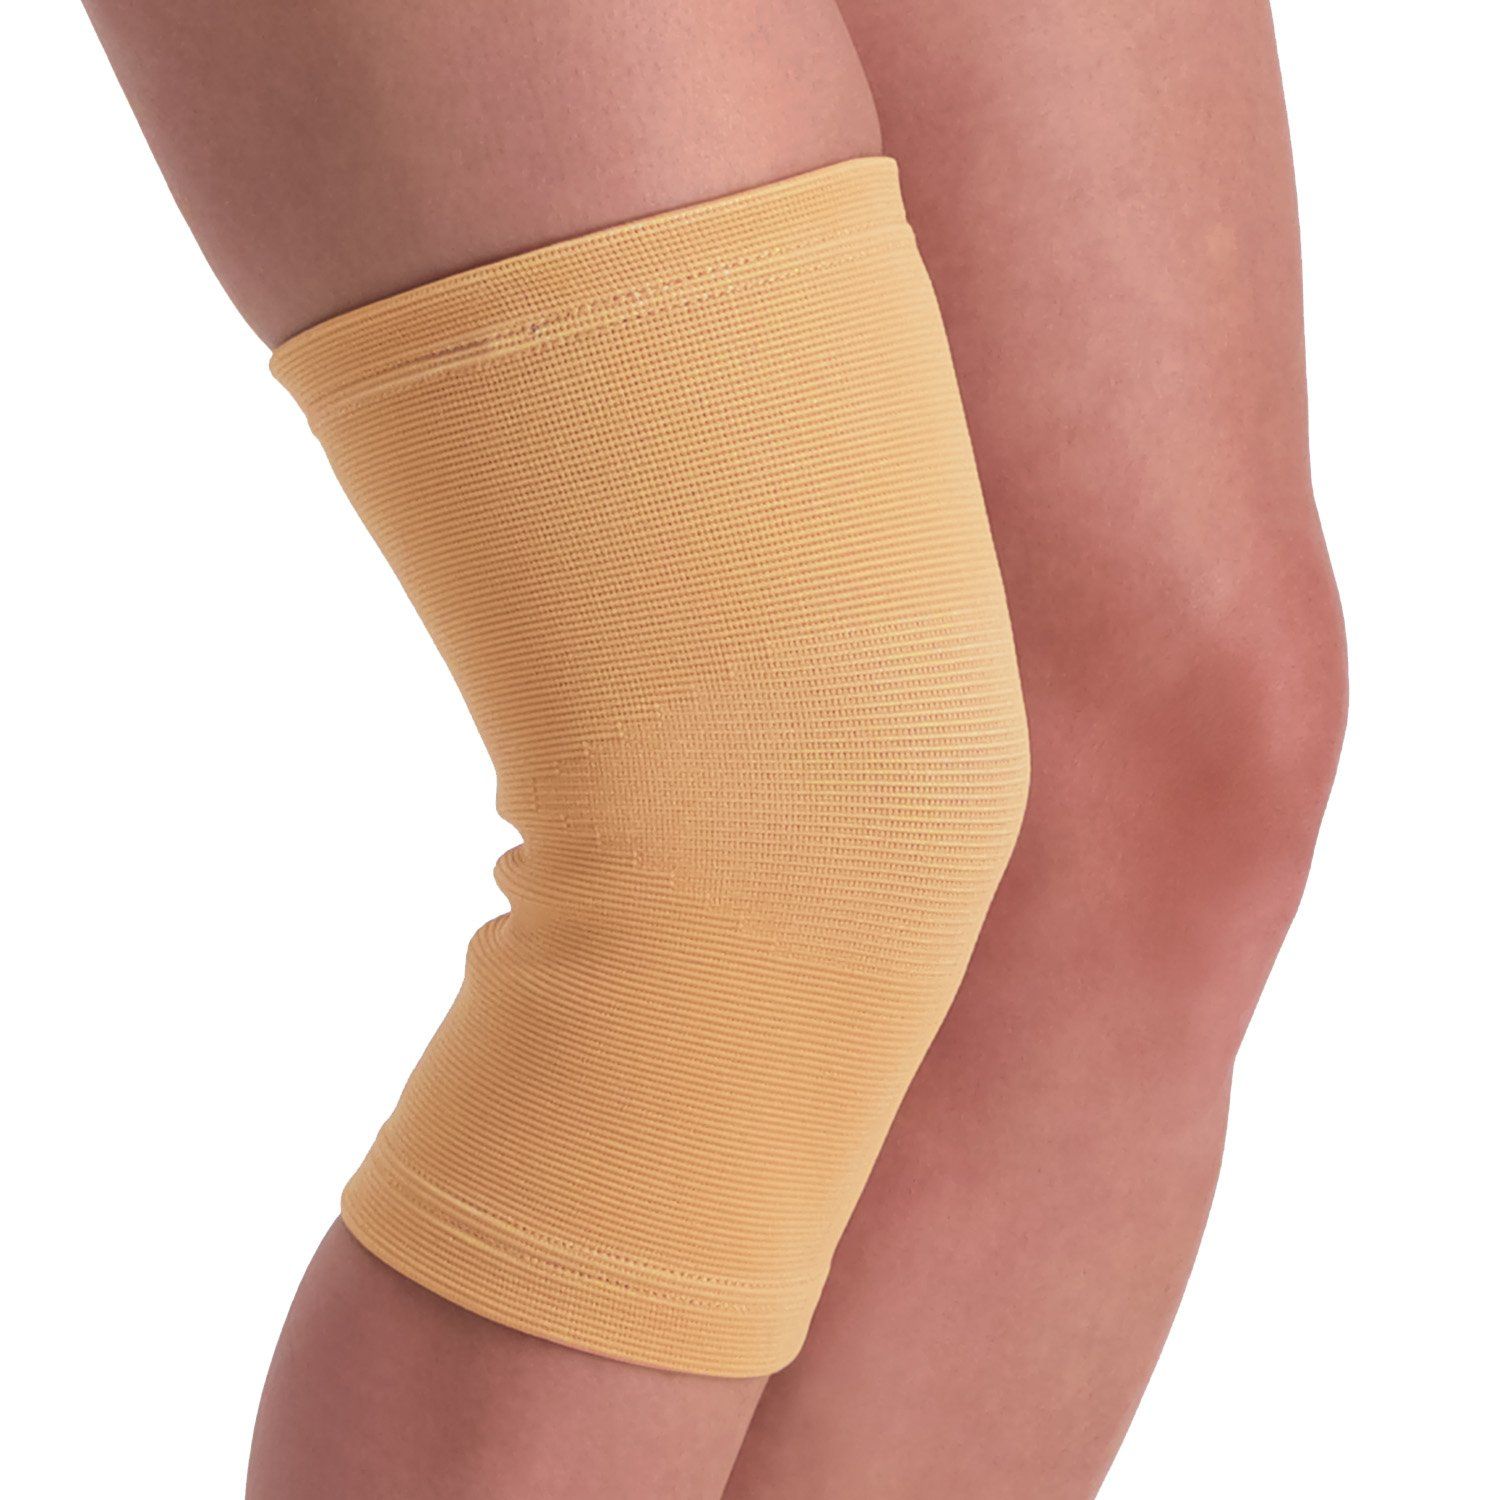 medidu knee sleeve